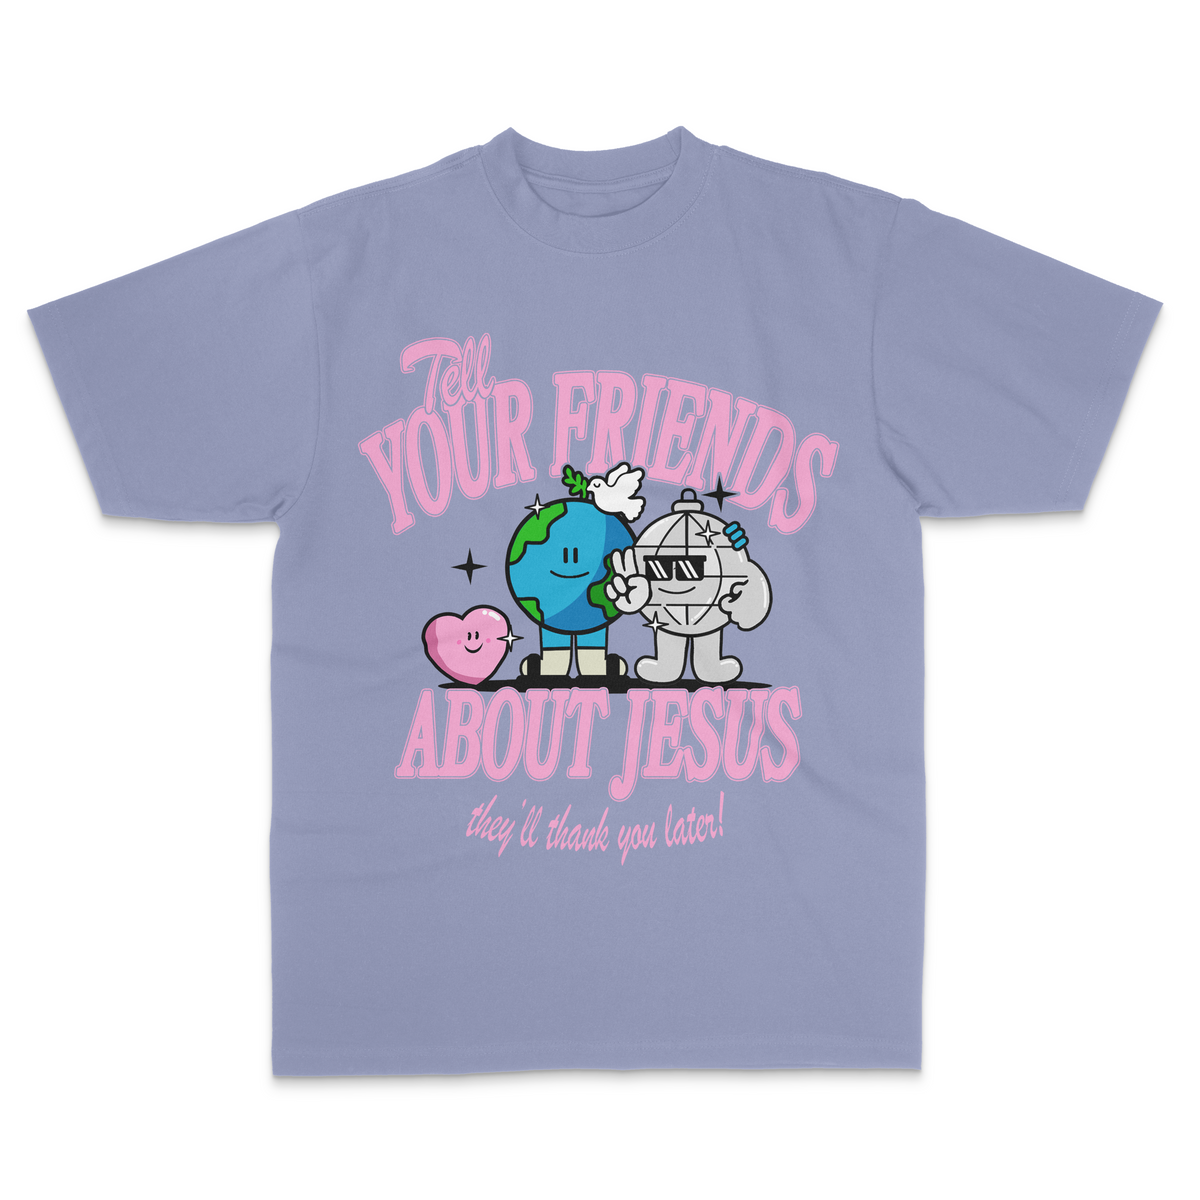 Tell Your Friends About Jesus - Vintage Violet